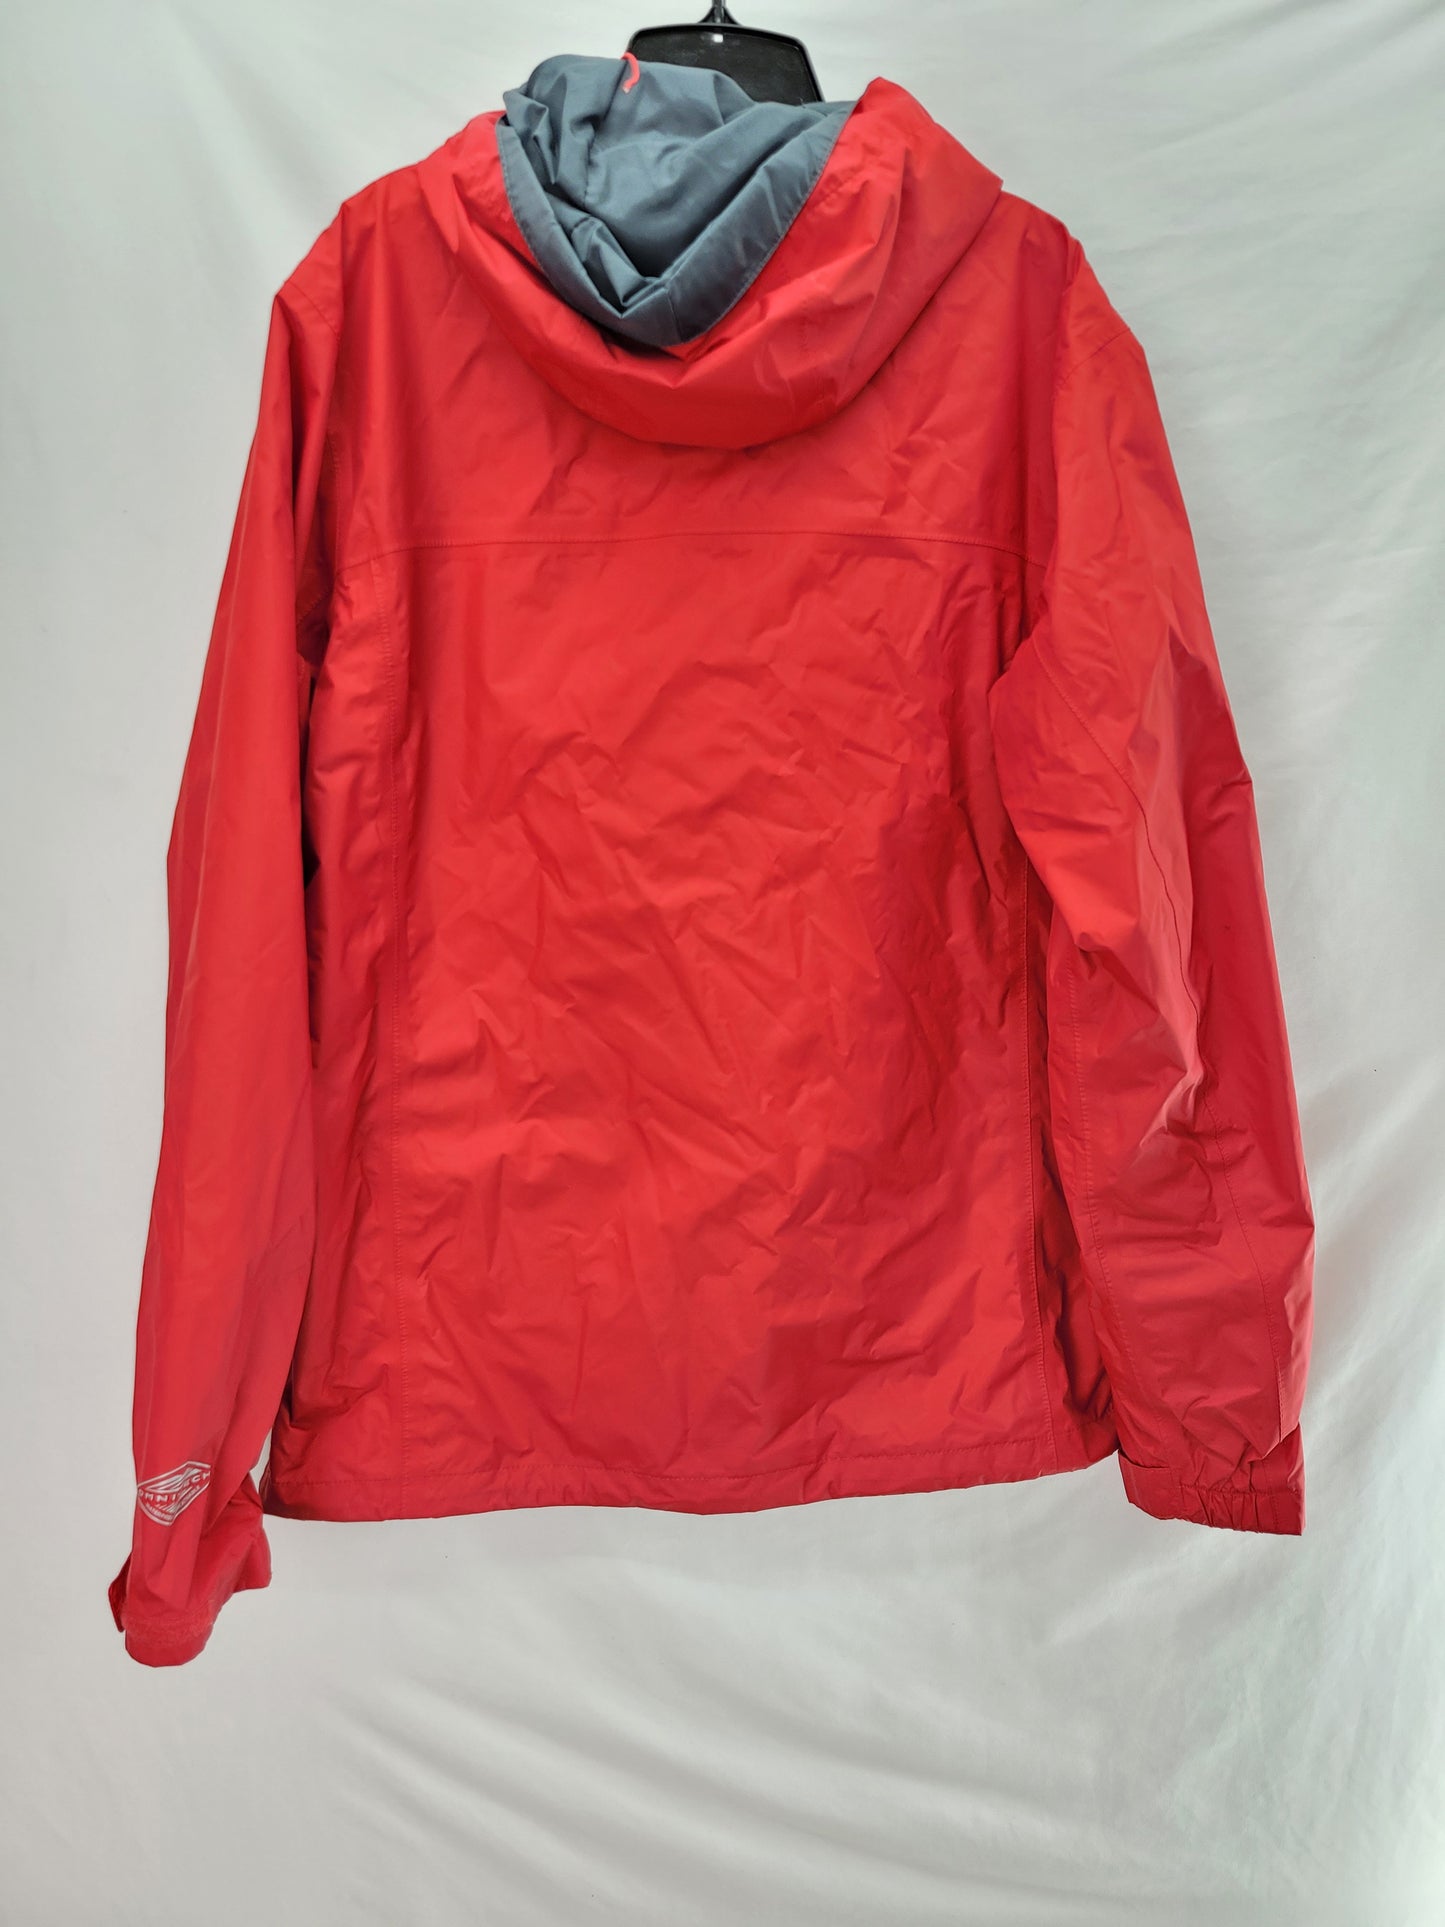 Columbia Winter Jacket Red - Medium